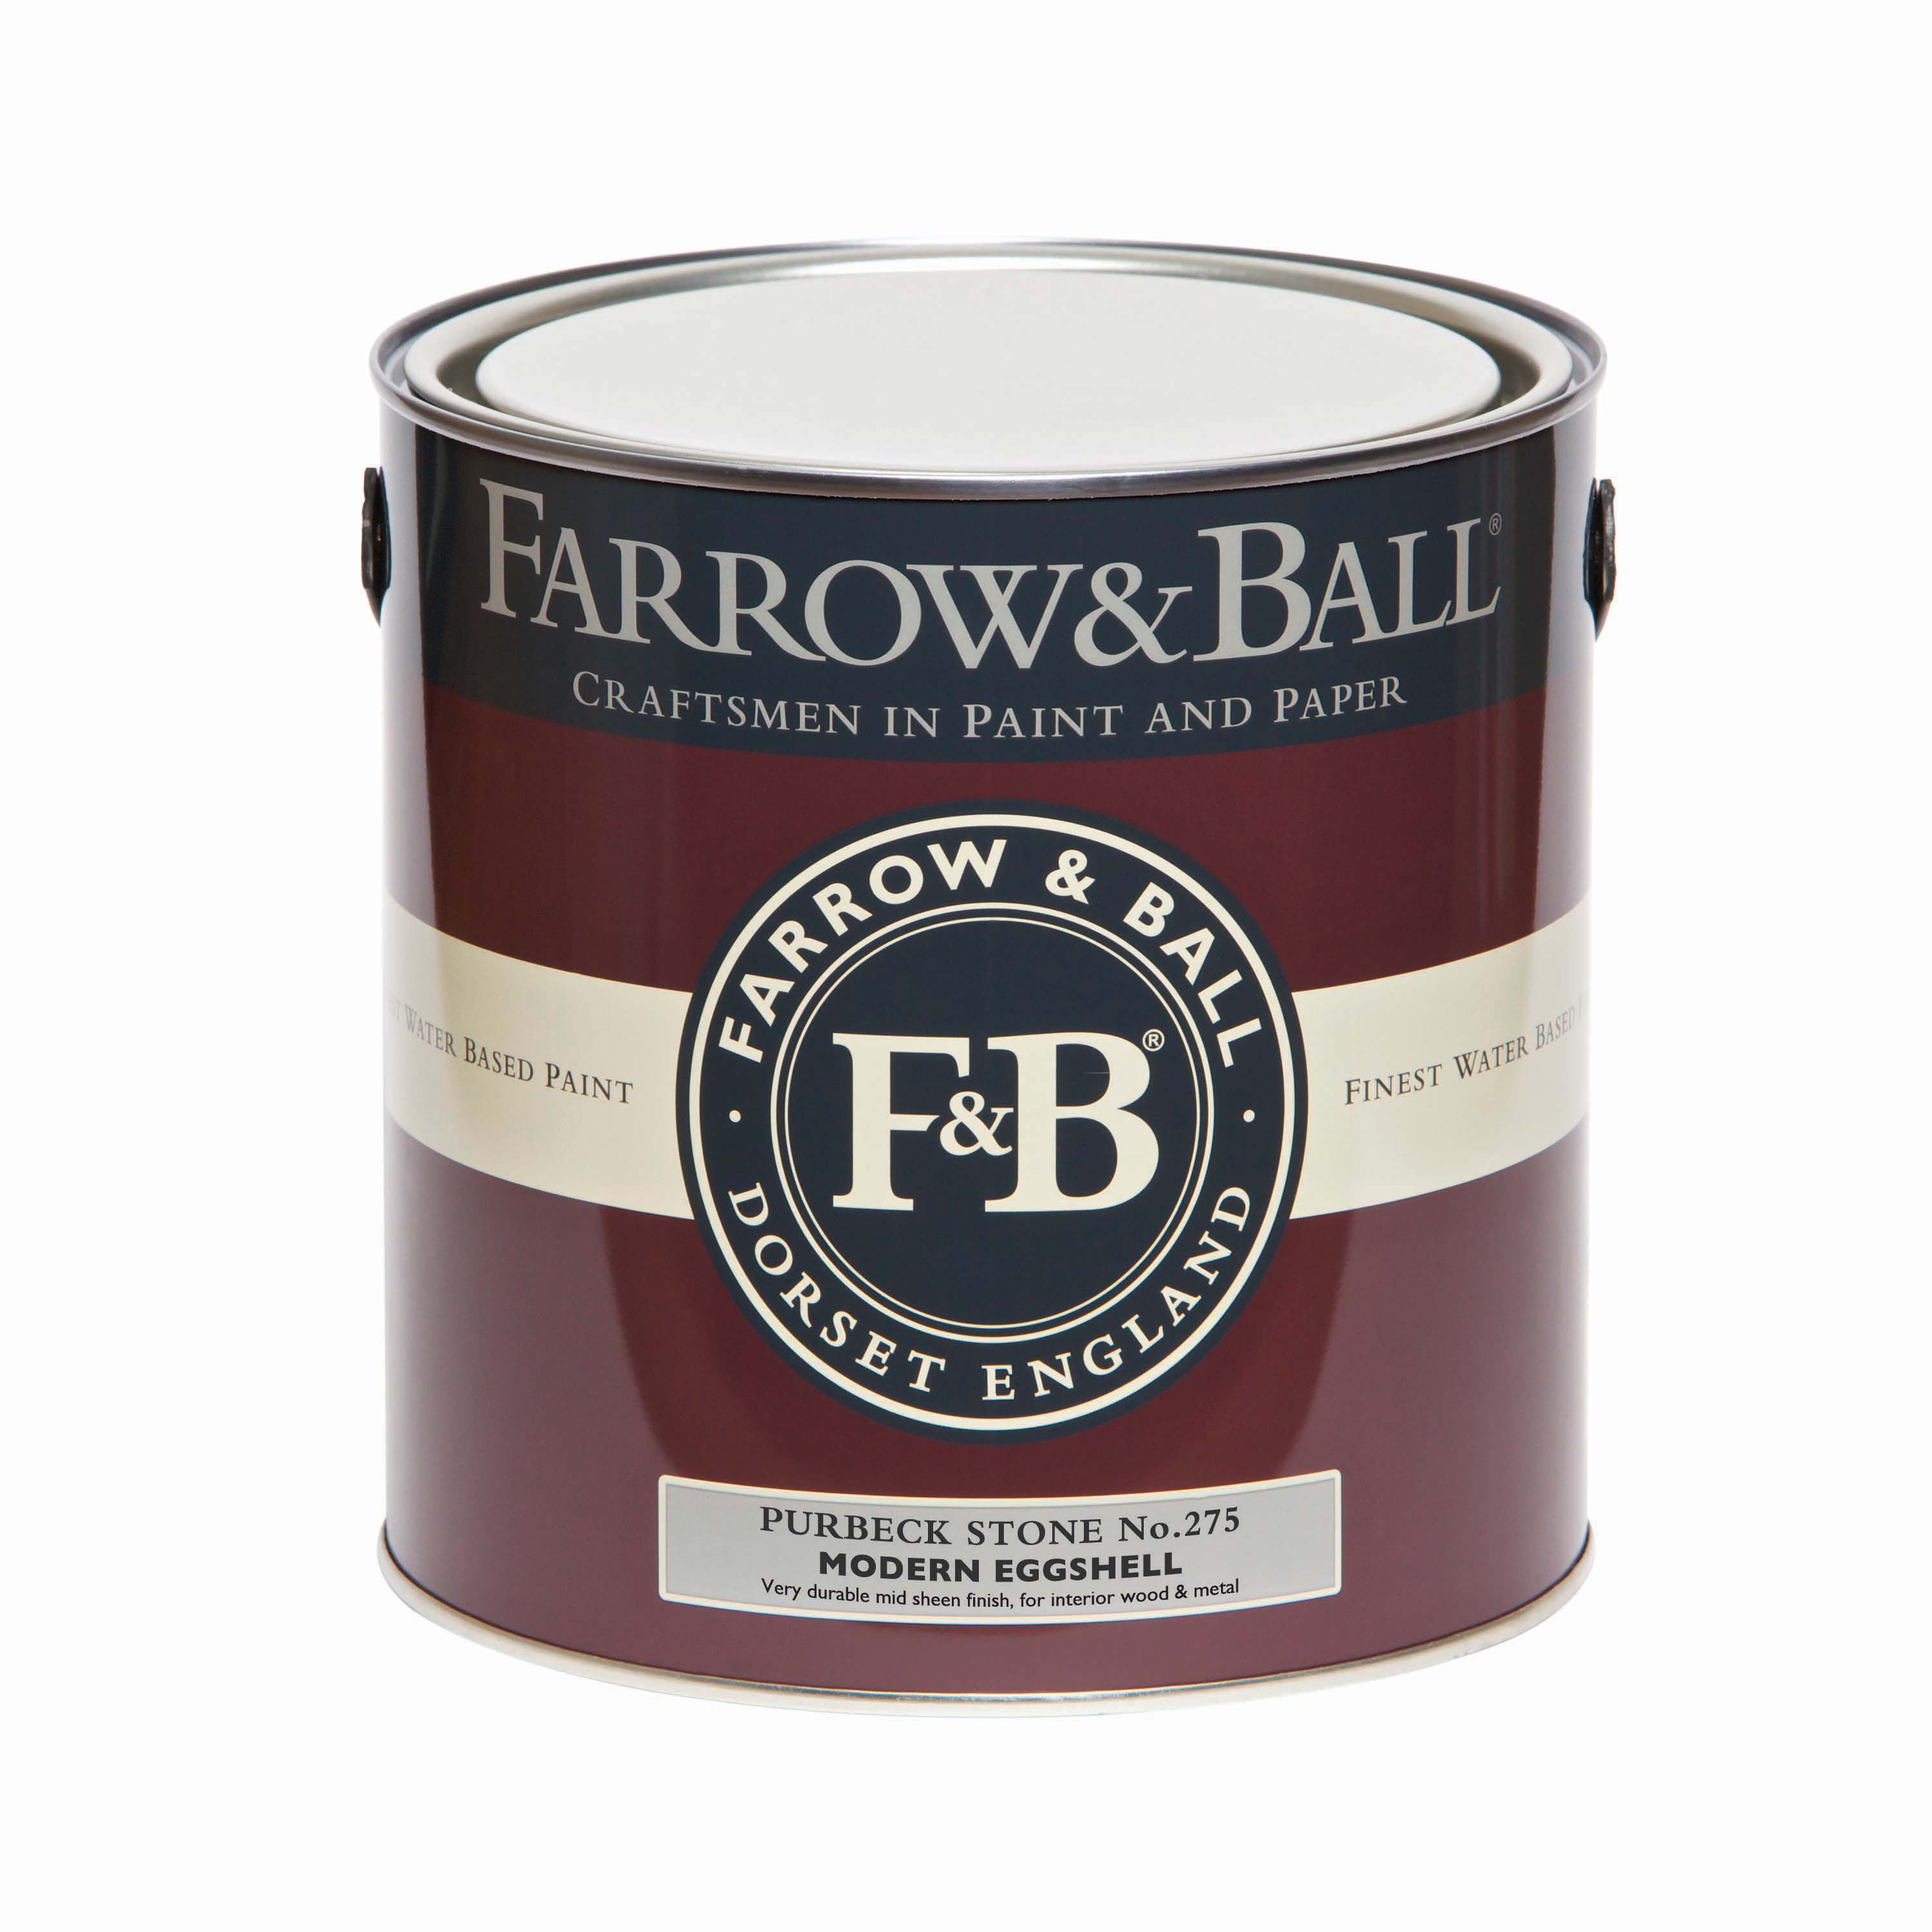 Farrow & Ball Modern Purbeck Stone No.275 Eggshell Paint, 2.5L